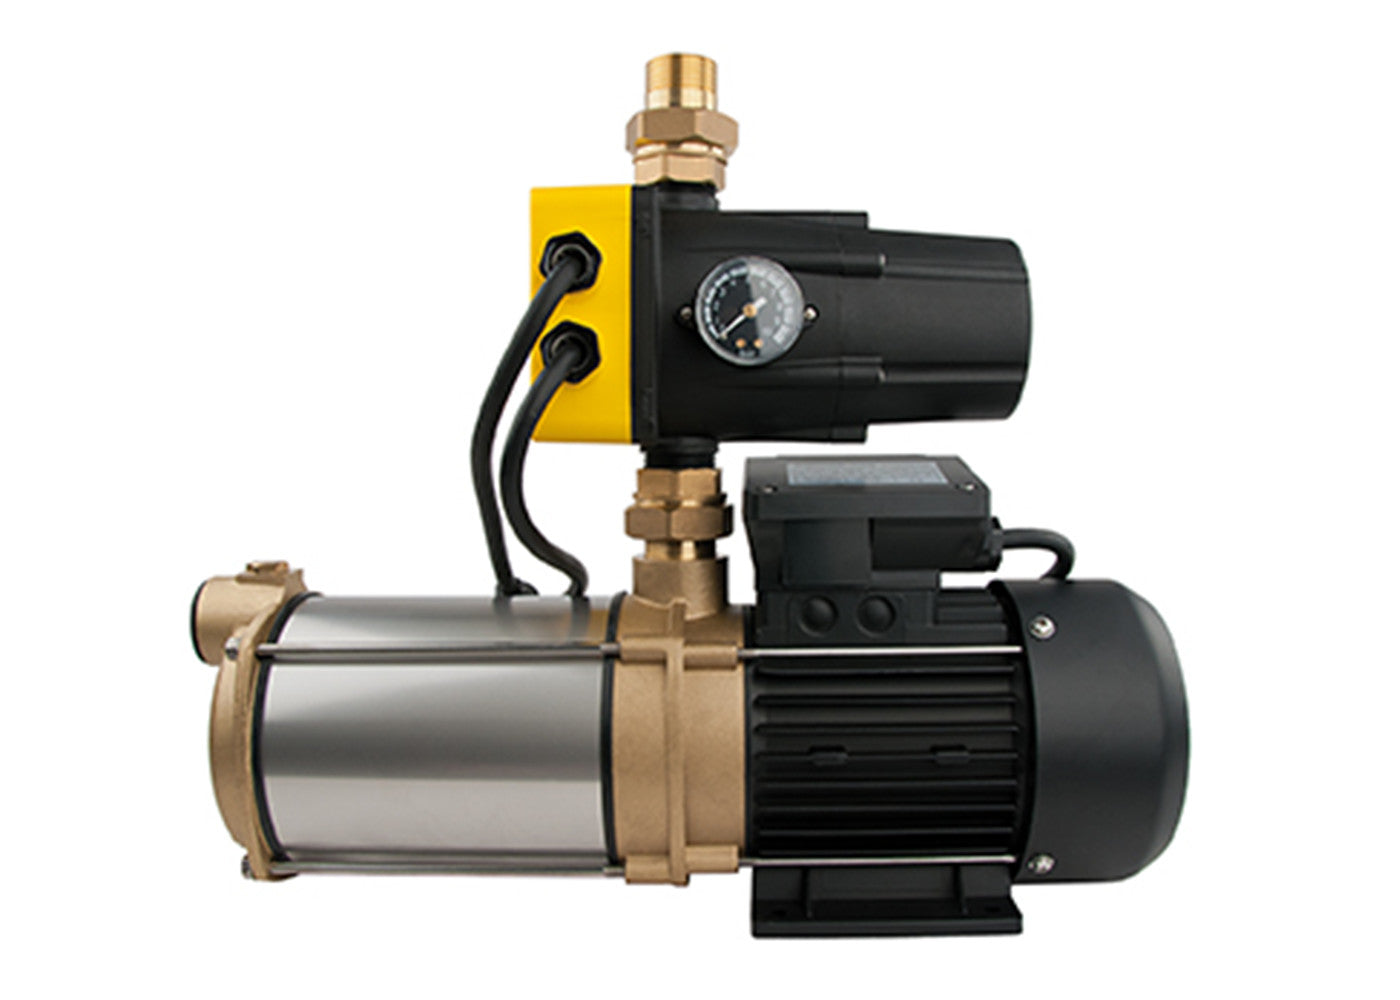 Hauswasserautomat CPS 15-4MB/Kit 05 OPTIMATIC pro für das Haus